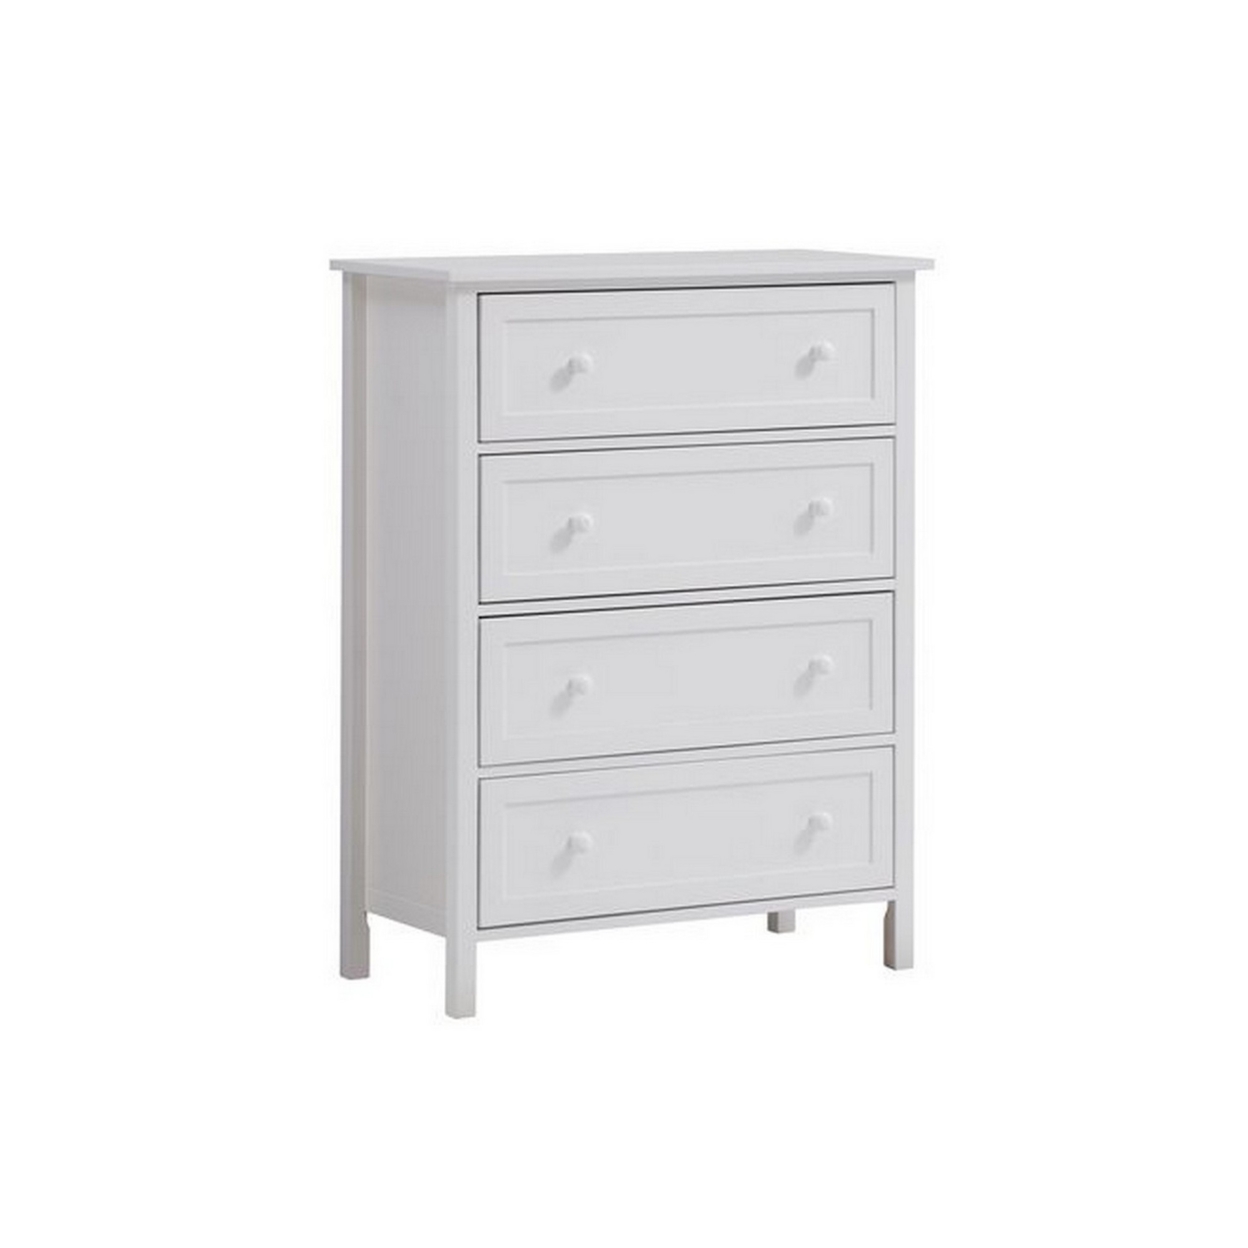 Mio 46 Inch 4 Drawer Tall Dresser Chest, Solid Wood, Glossy White- Saltoro Sherpi